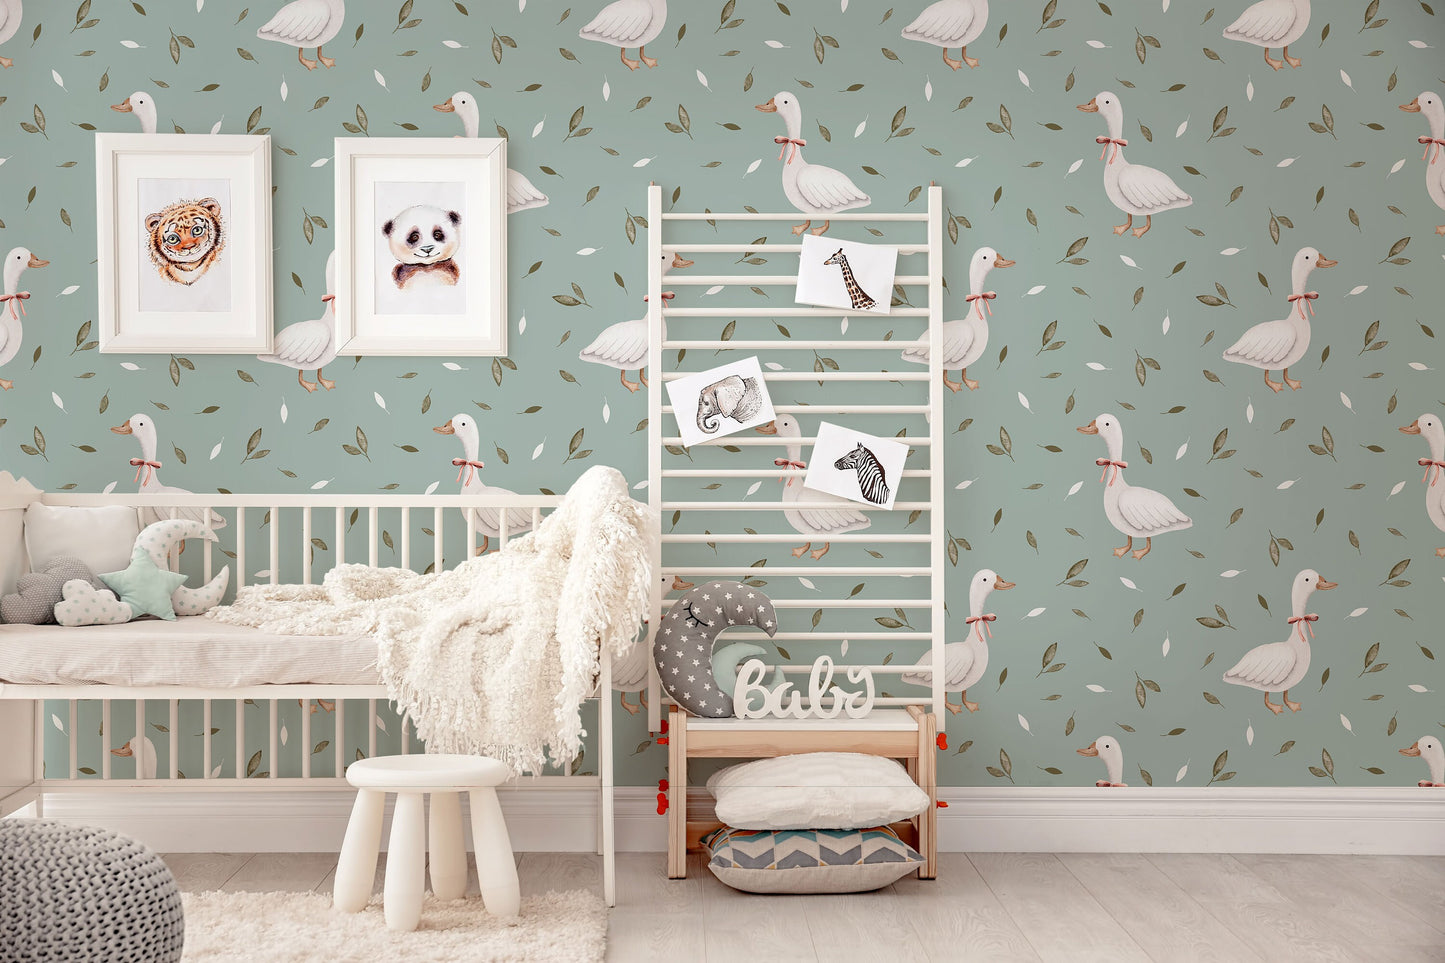 Goose Wallpaper | Geese Wall Decor | Animal Peel and Stick Wallpaper | Cute Goose Decor | Animal Wall Art